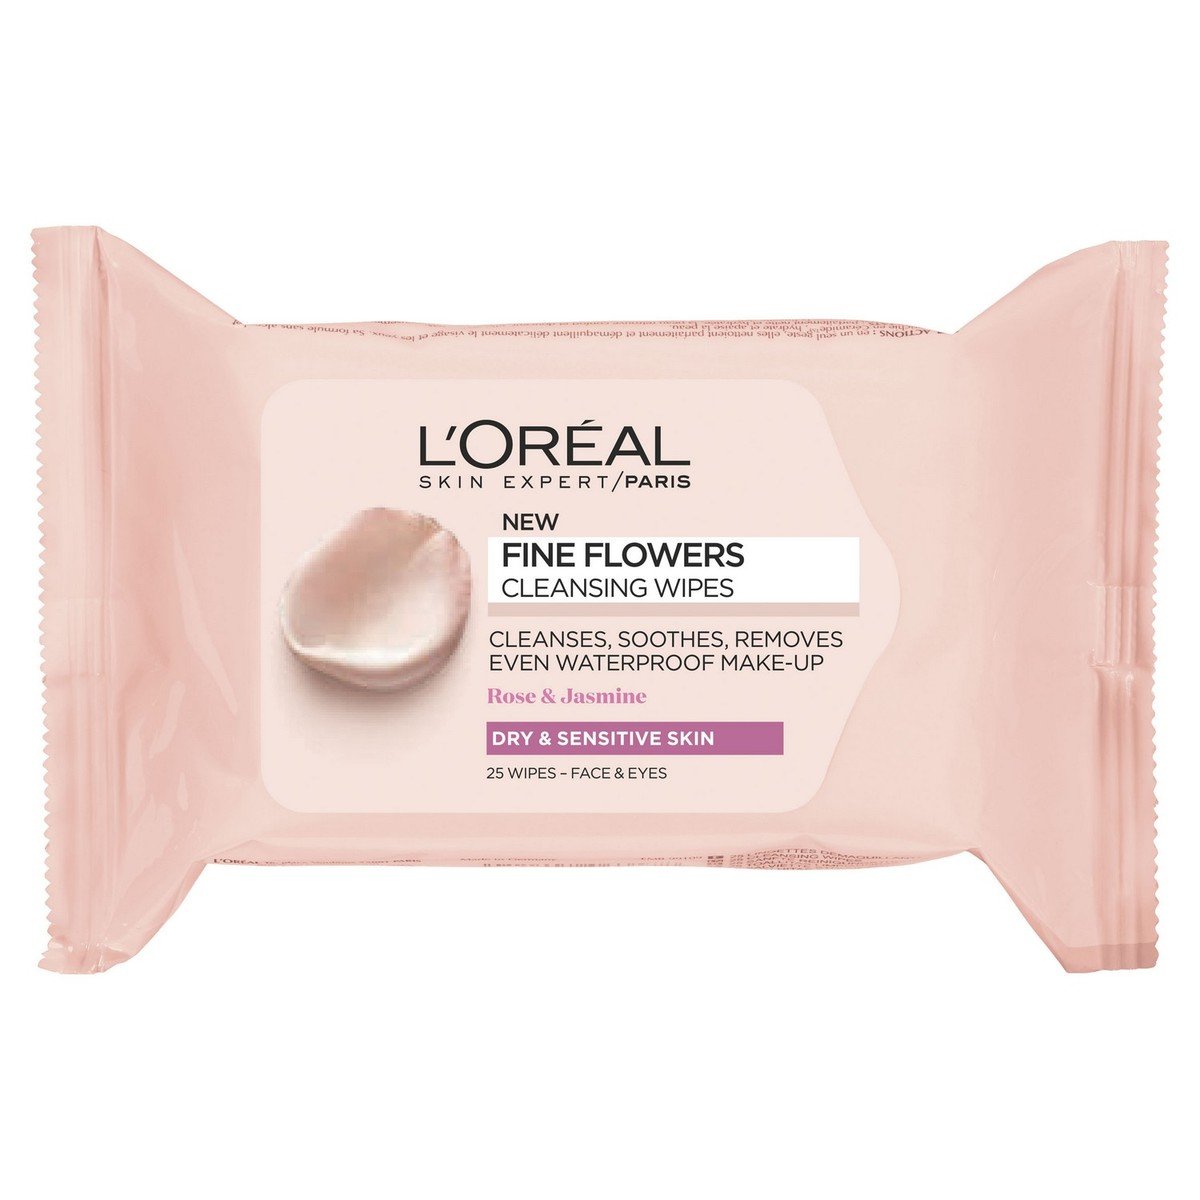 L'Oreal Paris Fine Flowers Cleansing Wipes Dry & Sensitive Skin 25 pcs